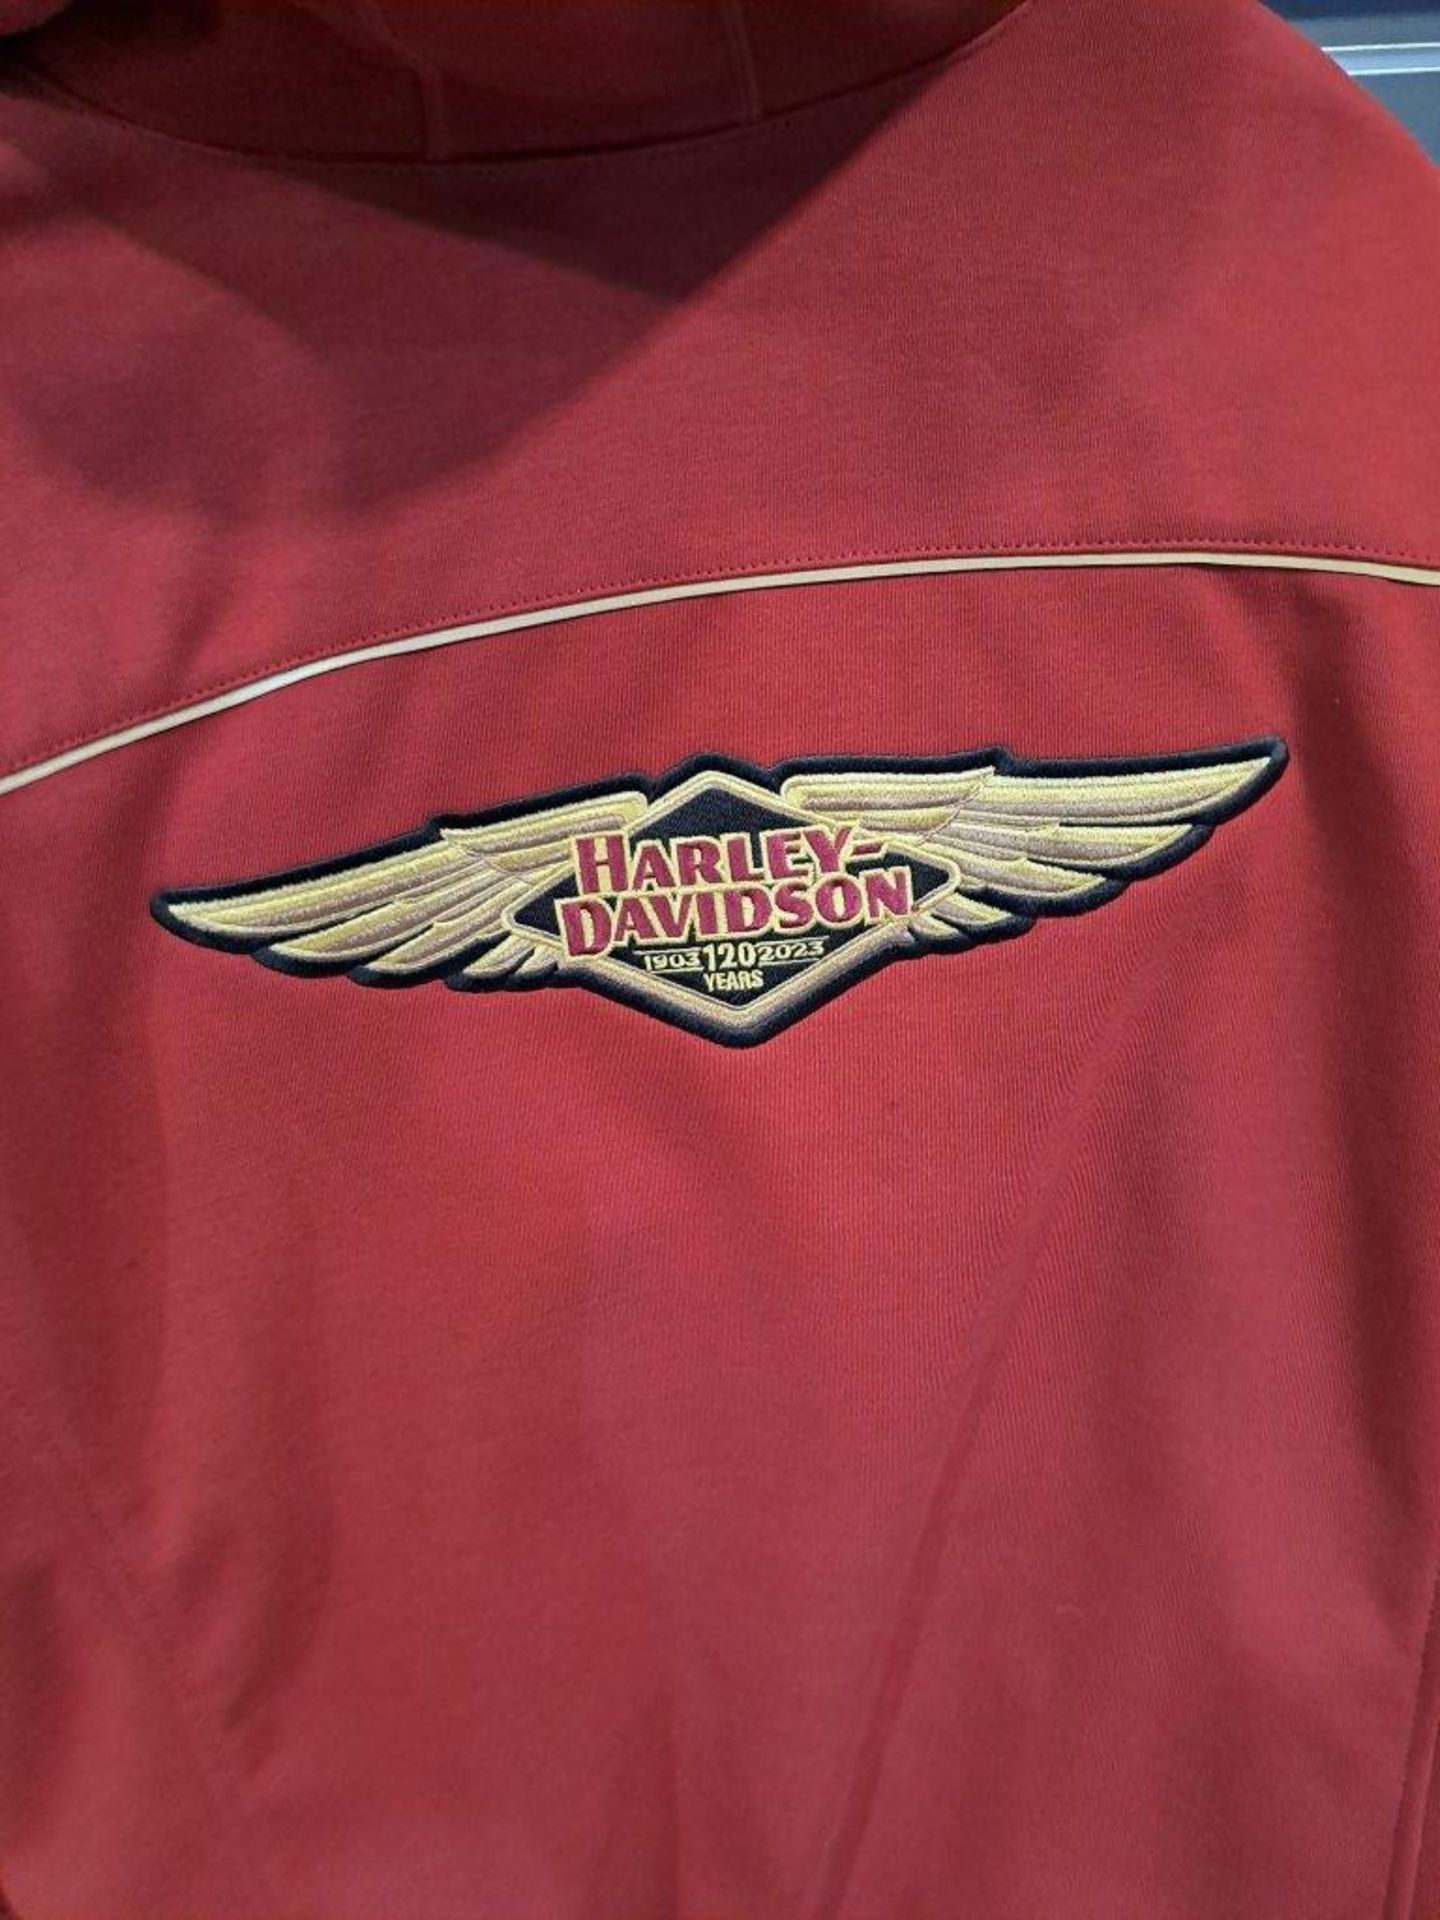 Harley Davidson 120th Anniversary Textile 2XL Mens Jacket - Image 9 of 11